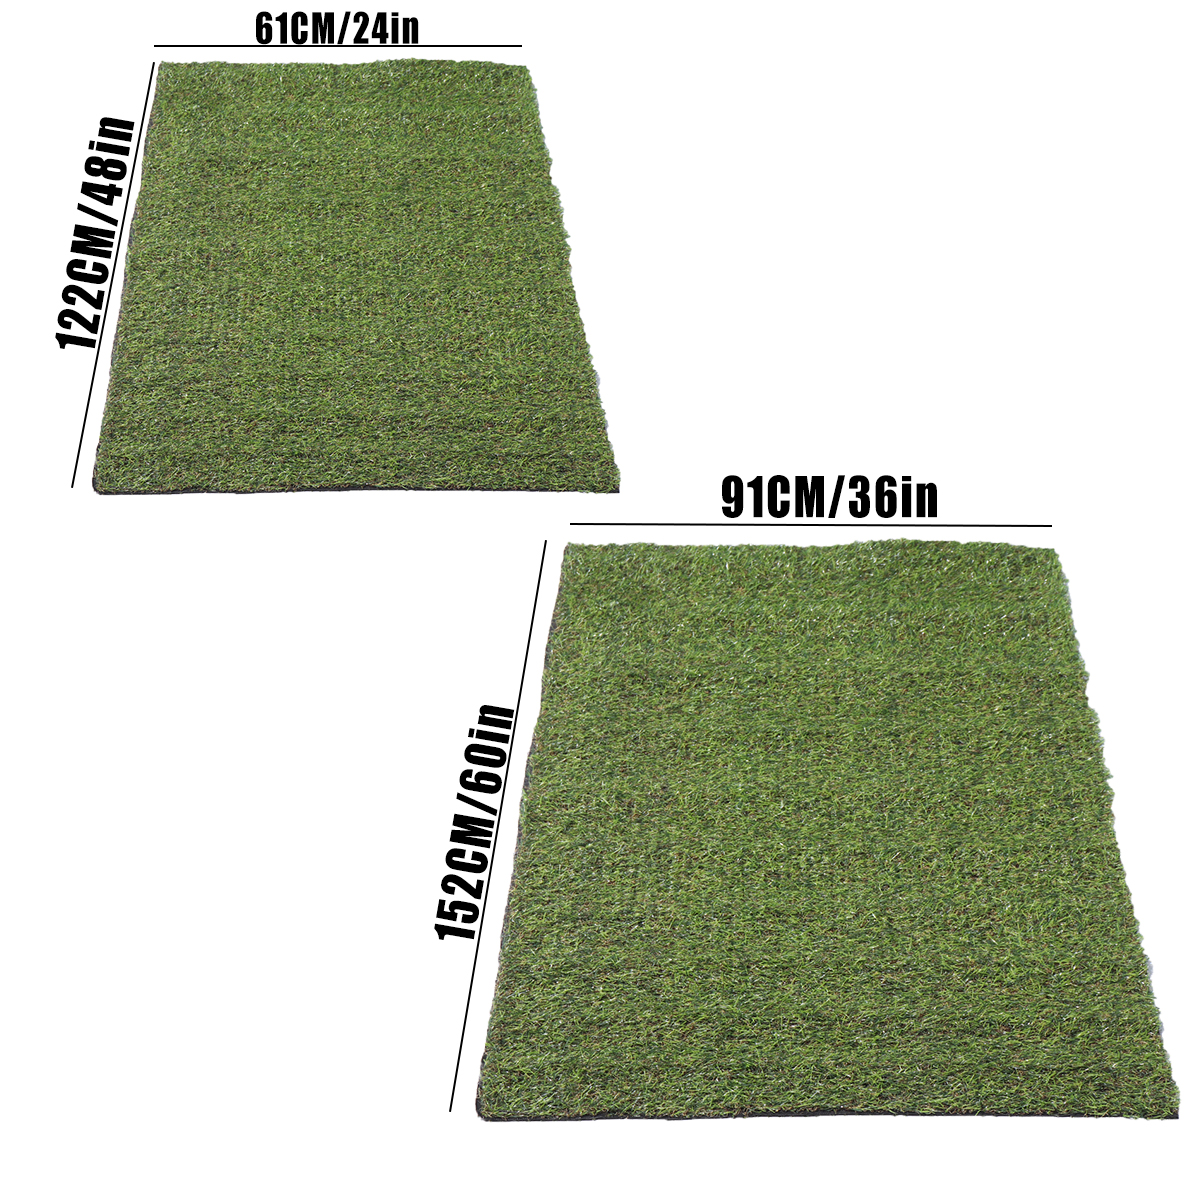 Artificial-Grass-Lawn-Turf-Synthetic-Plants-Lawn-Garden-Flooring-Decor-1702500-4